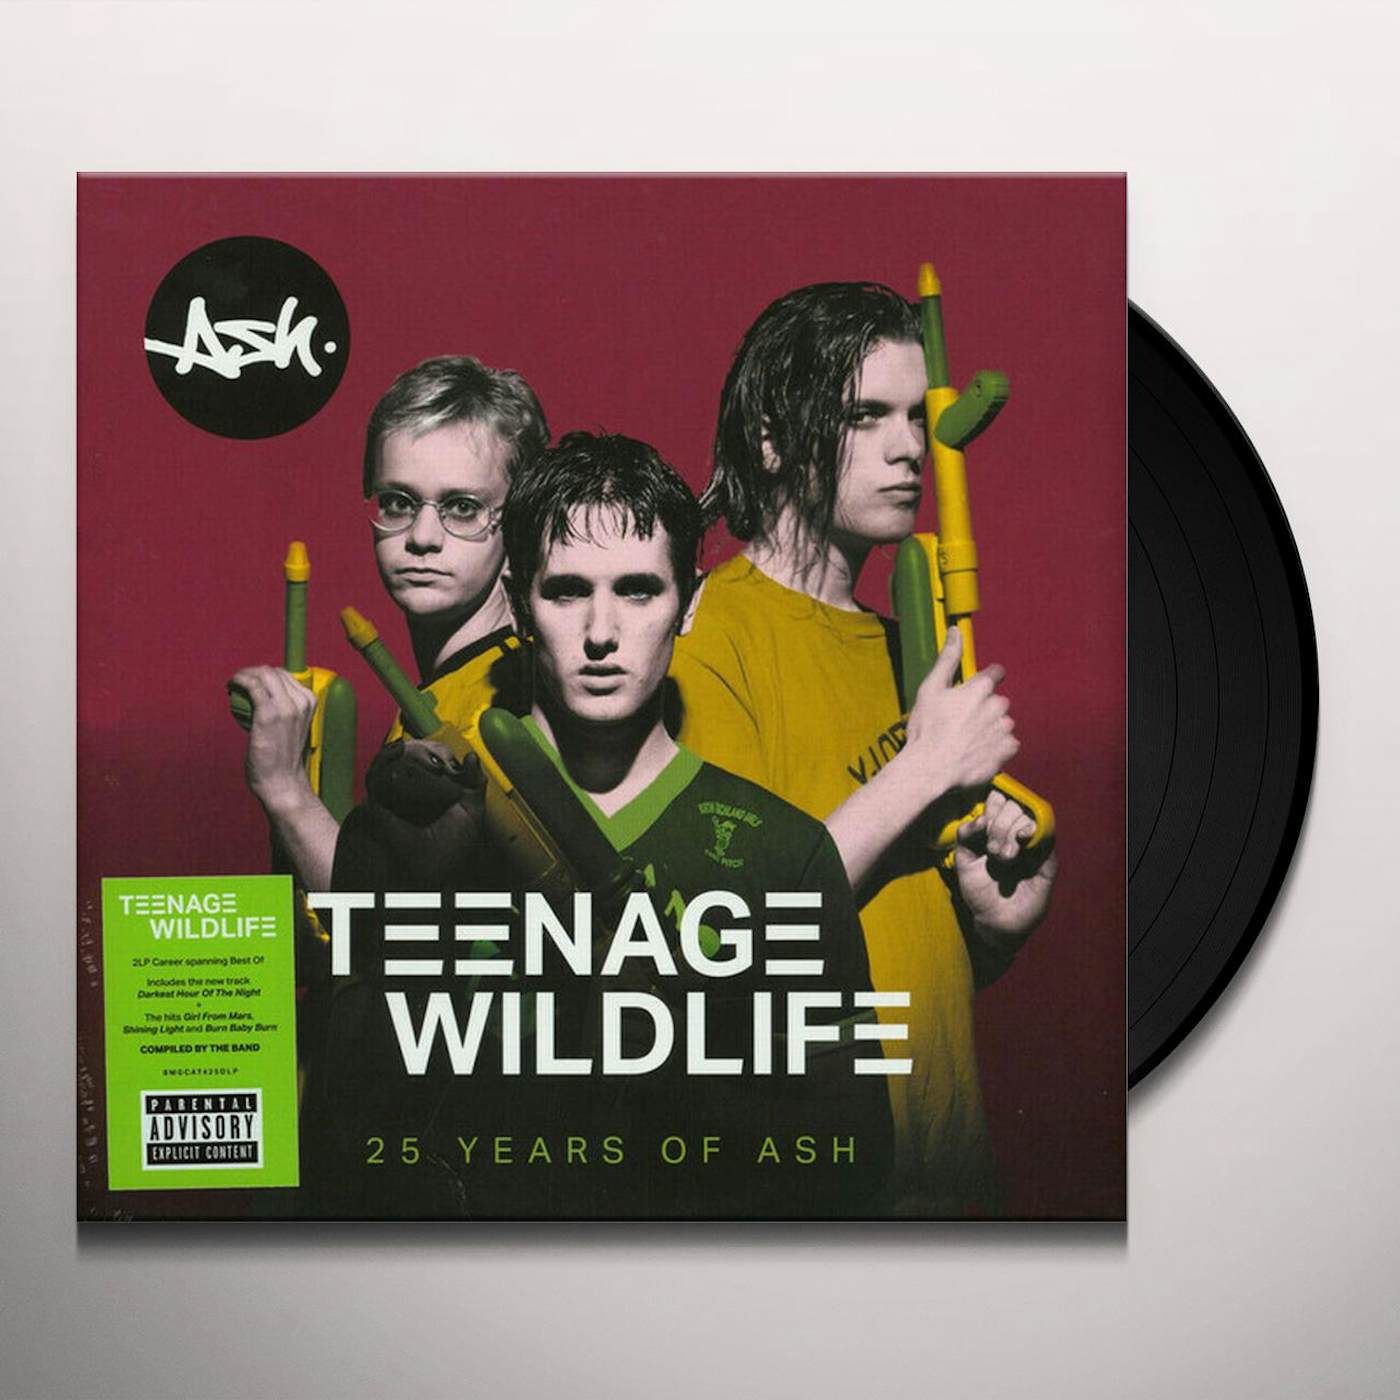 Teenage Wildlife - 25 Years of Ash Vinyl Record